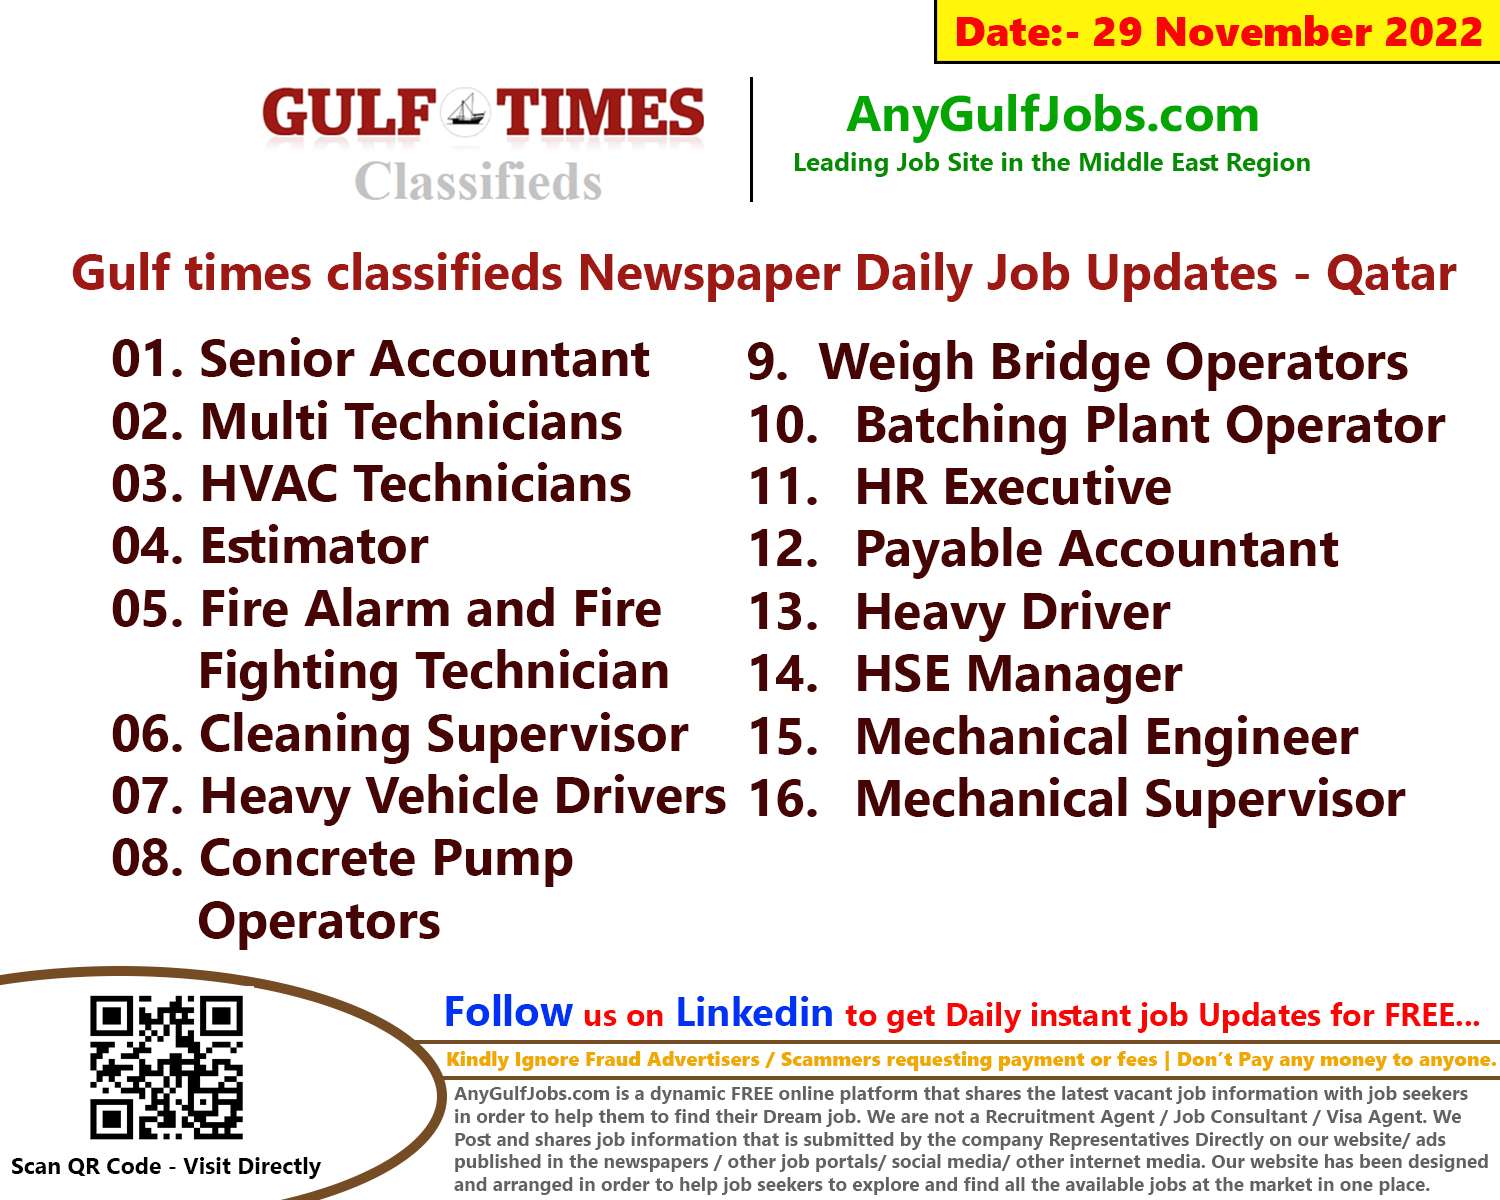 Gulf times classifieds Job Vacancies Qatar - 29 November 2022